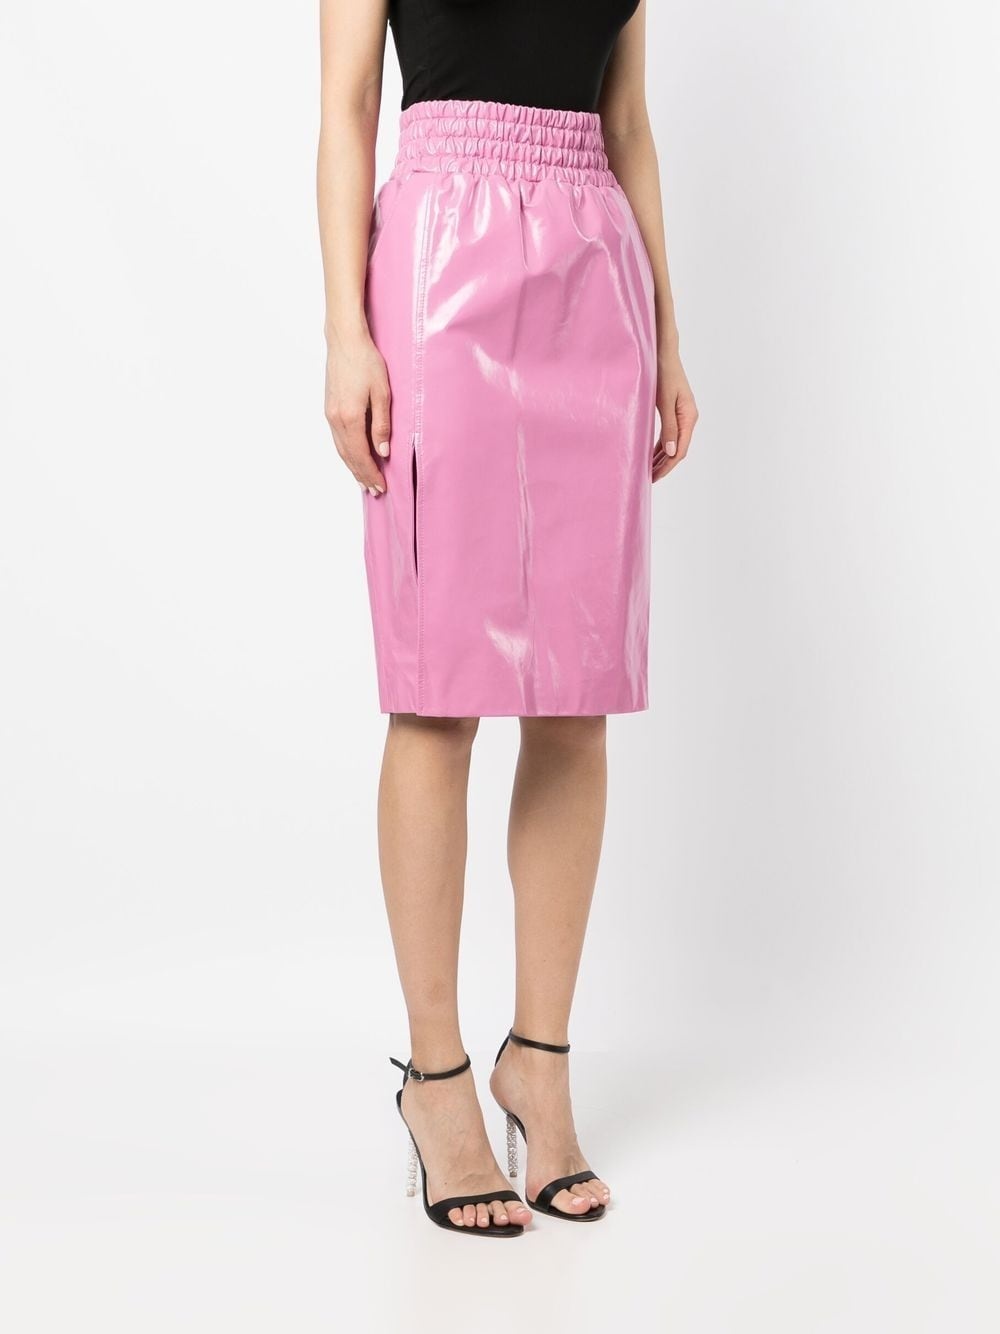 shiny textured leather midi skirt - 3